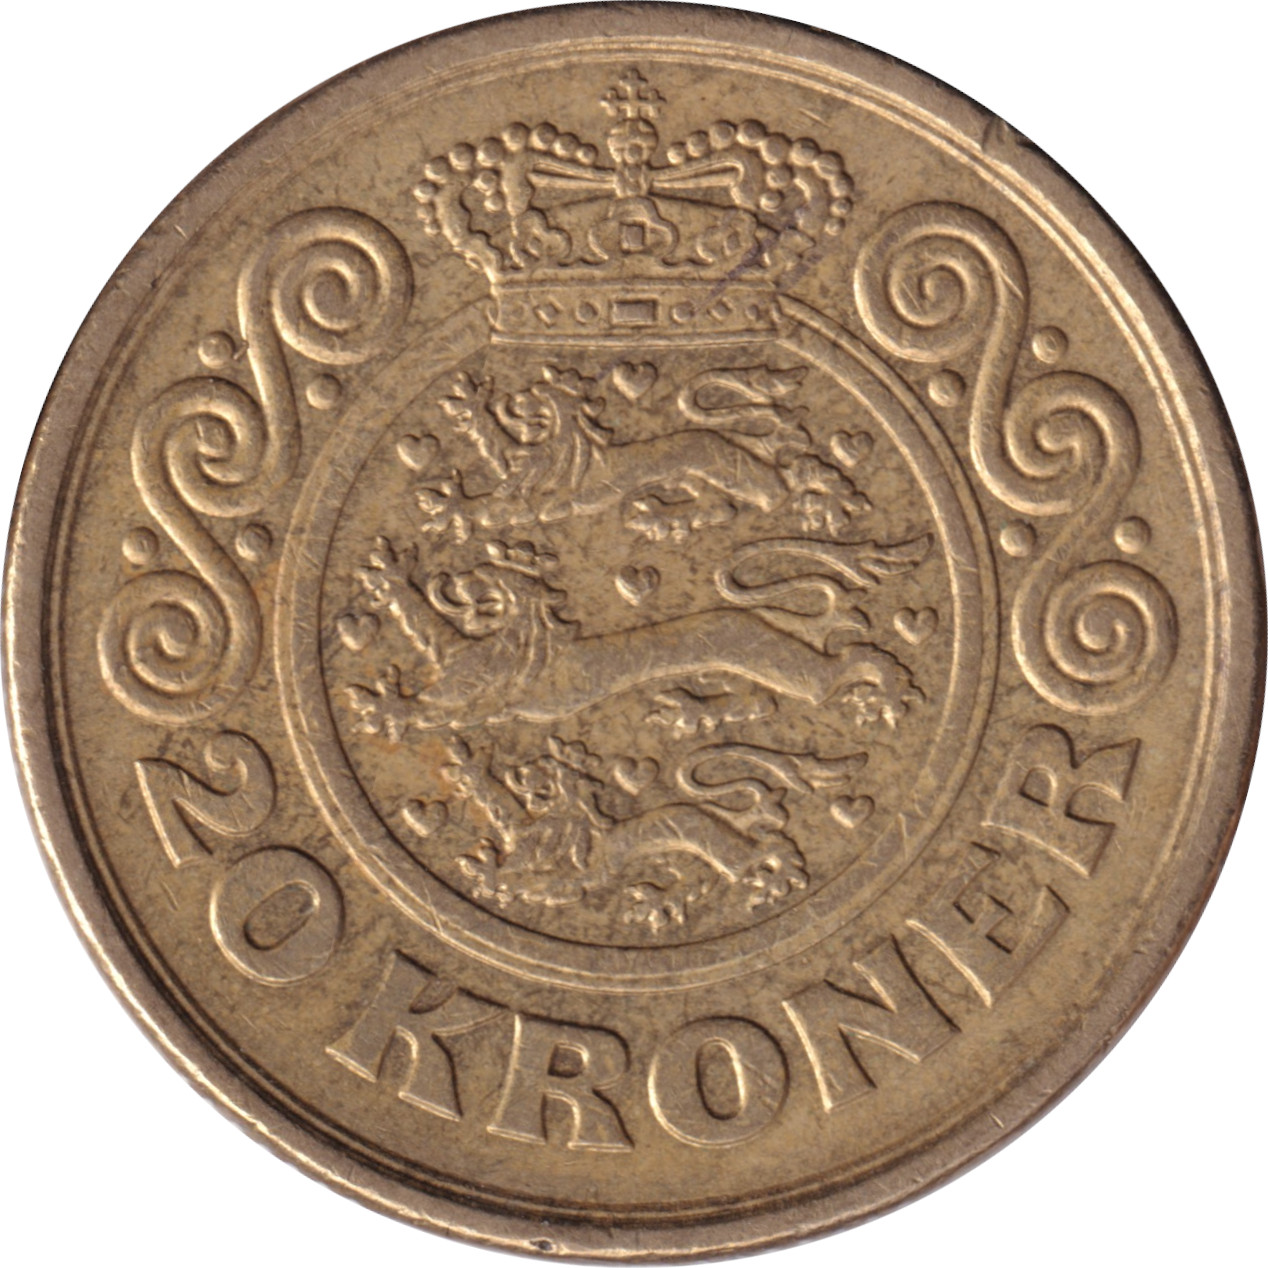 20 kroner - Margrethe II - Buste agé - Premières armoiries